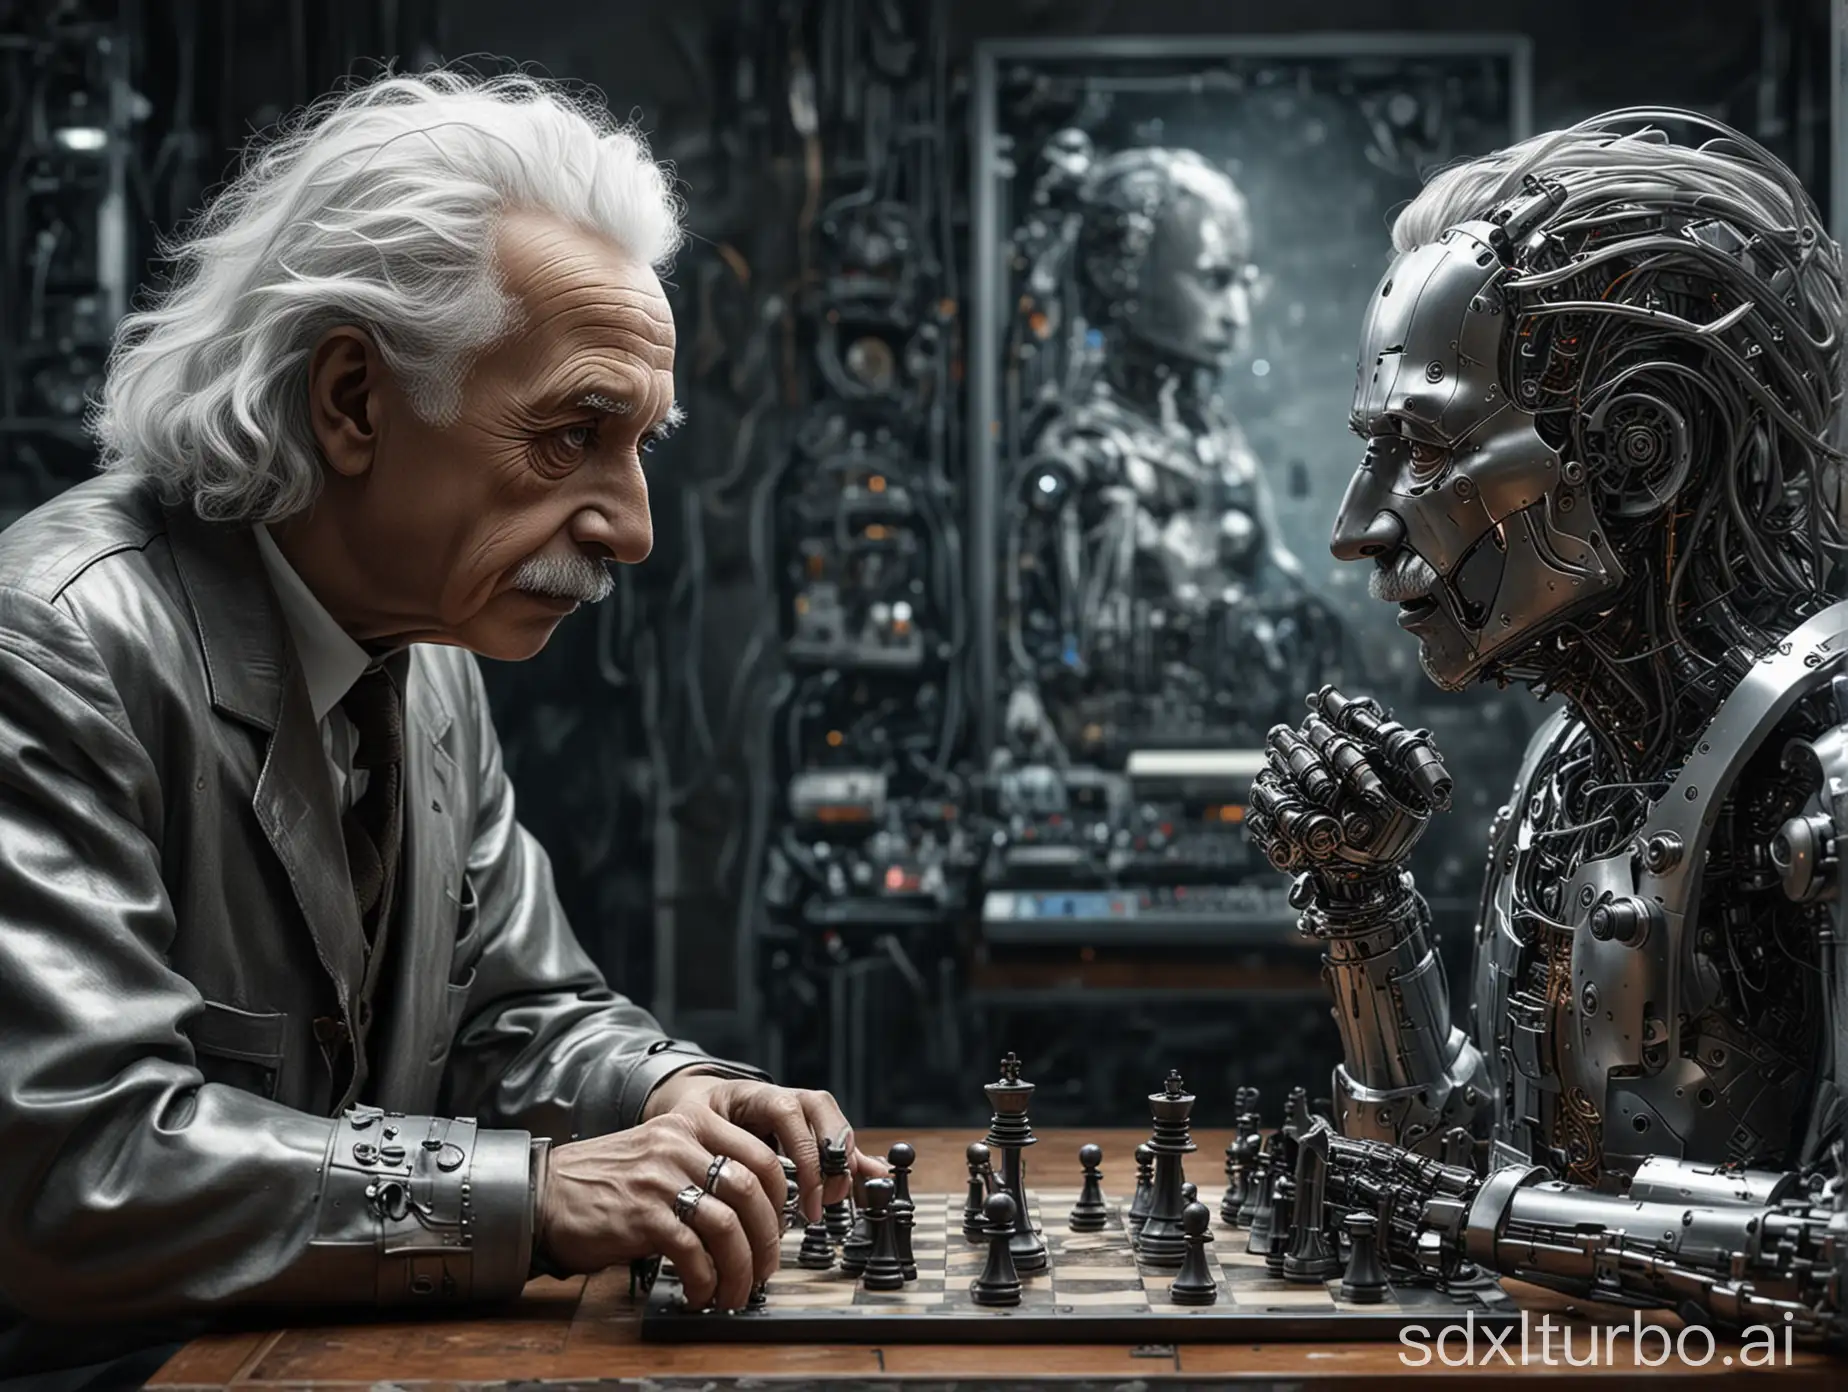 Albert-Einstein-vs-Cyborg-in-Futuristic-Chess-Match-A-Hyperrealistic-Artwork